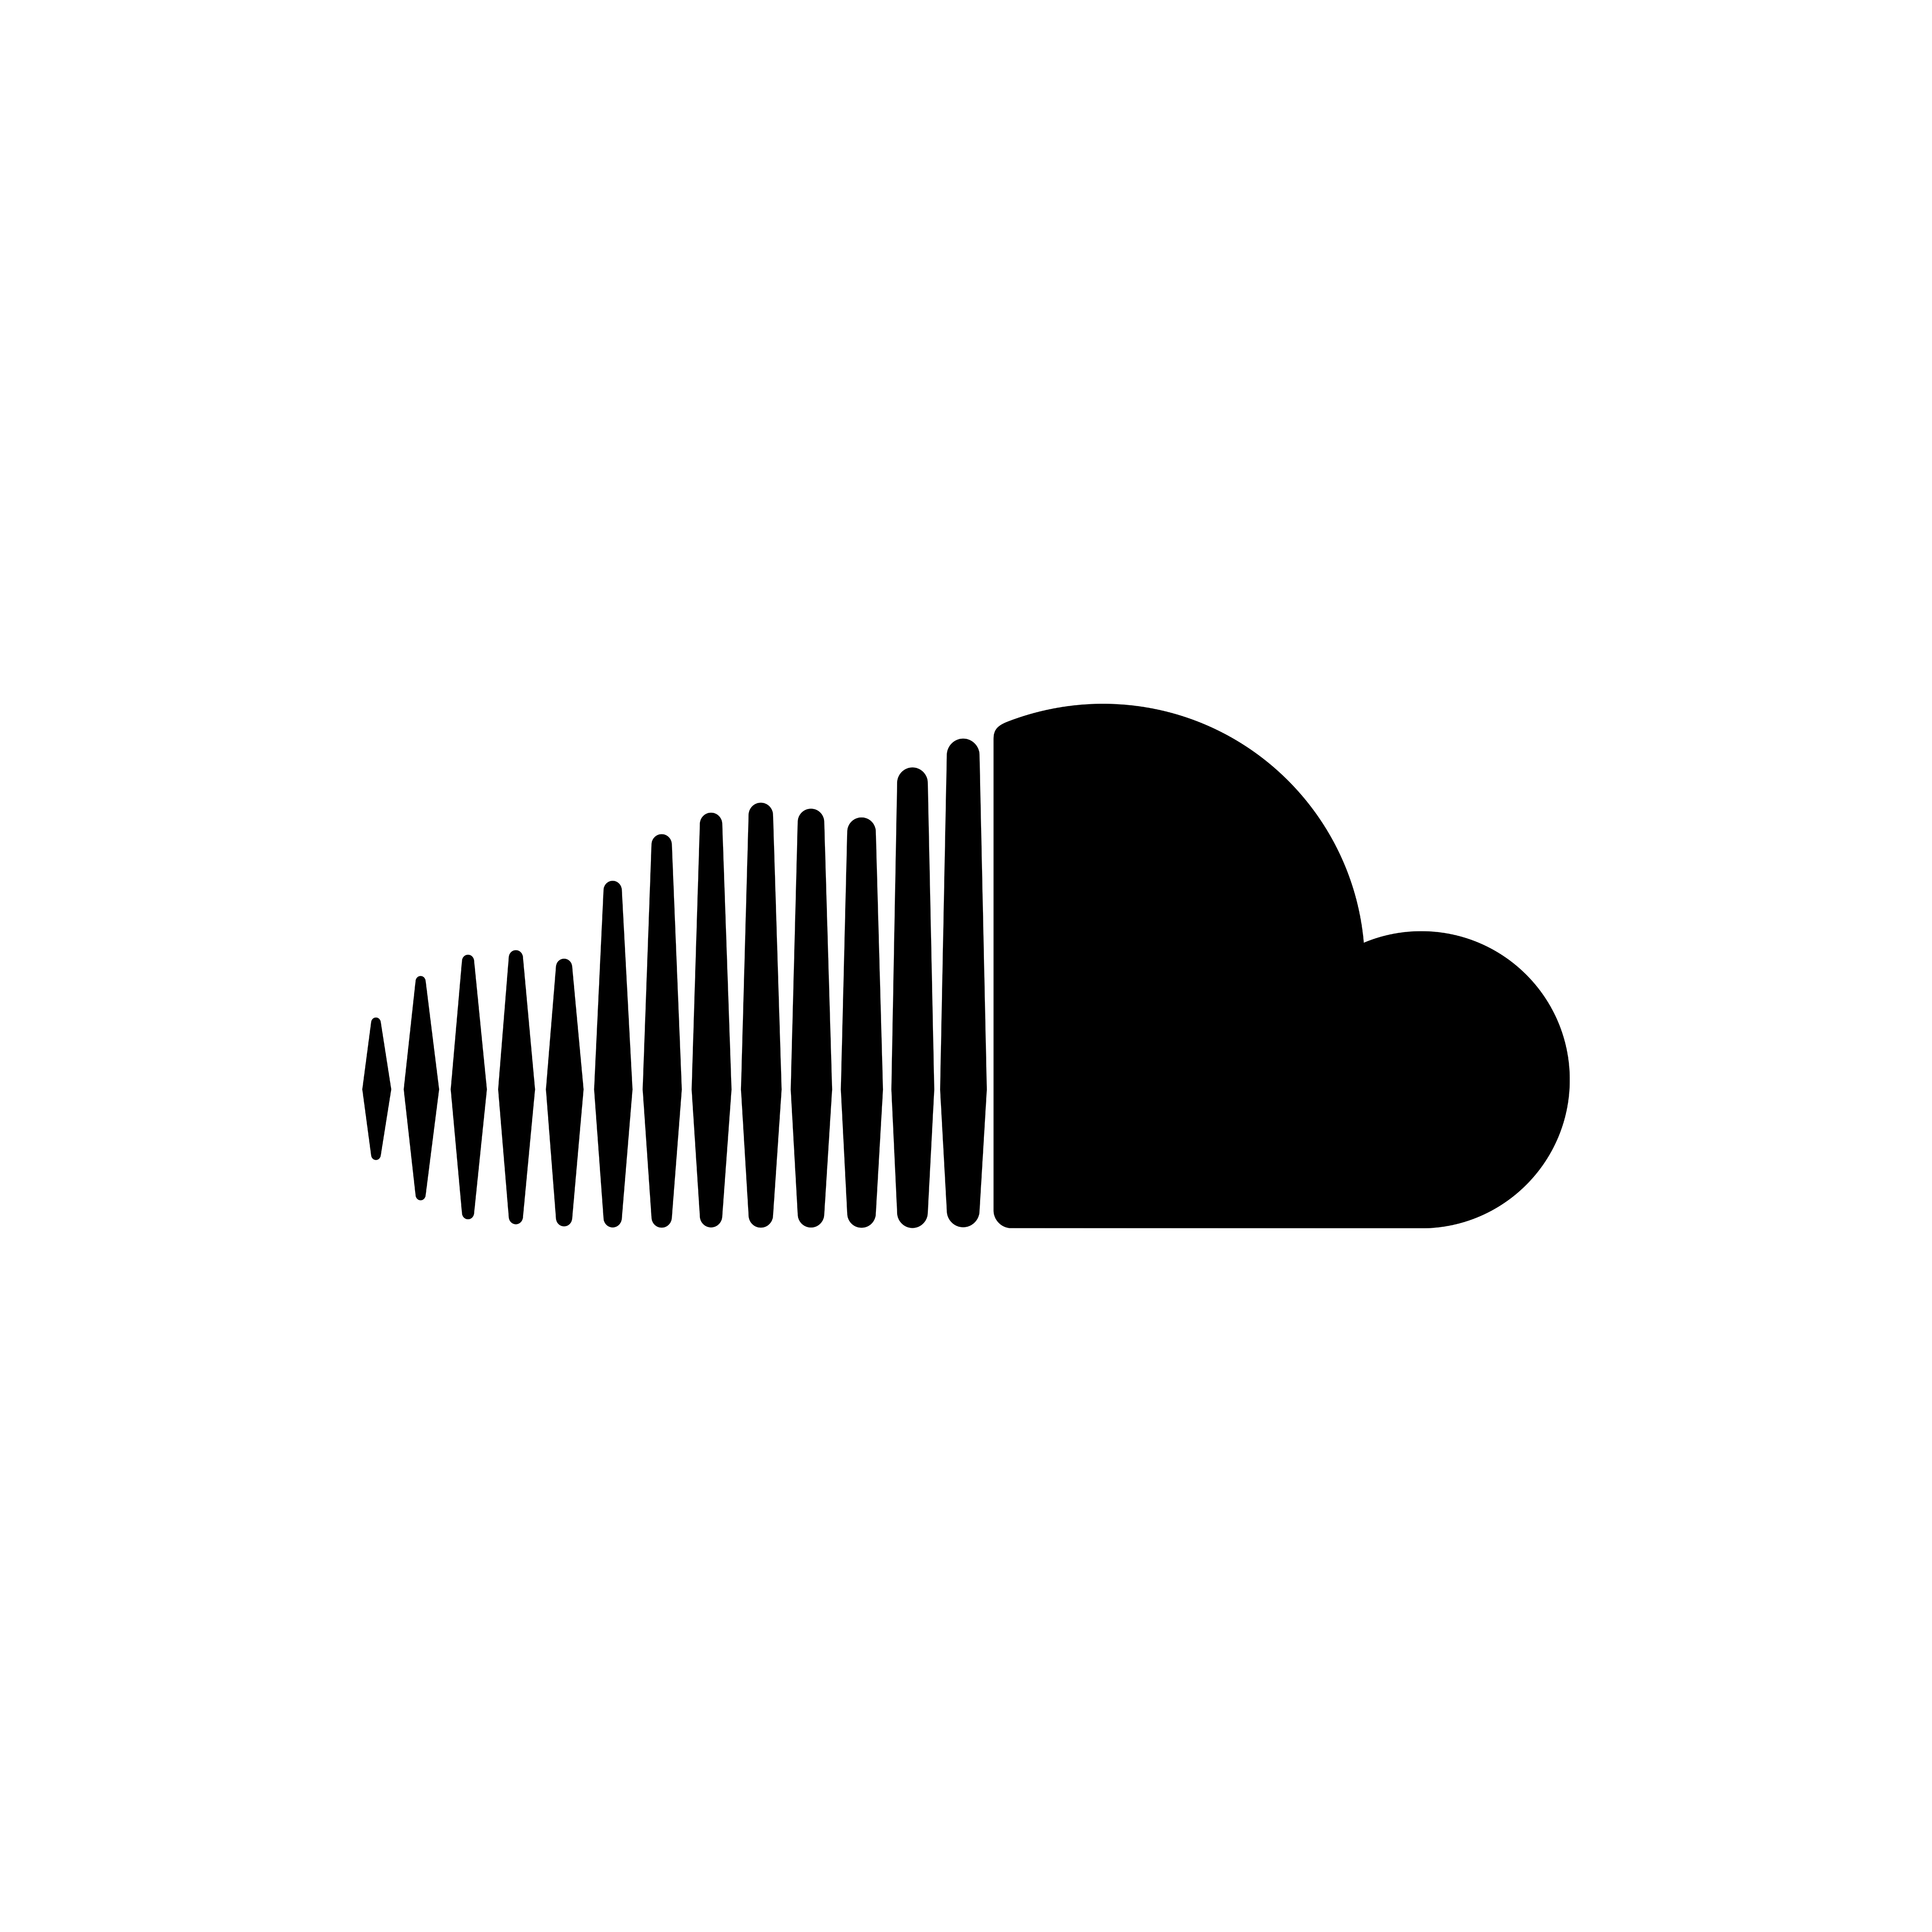 Transparent SoundCloud Logo - 12 PNG and SVG soundcloud black icons for free download | UIHere